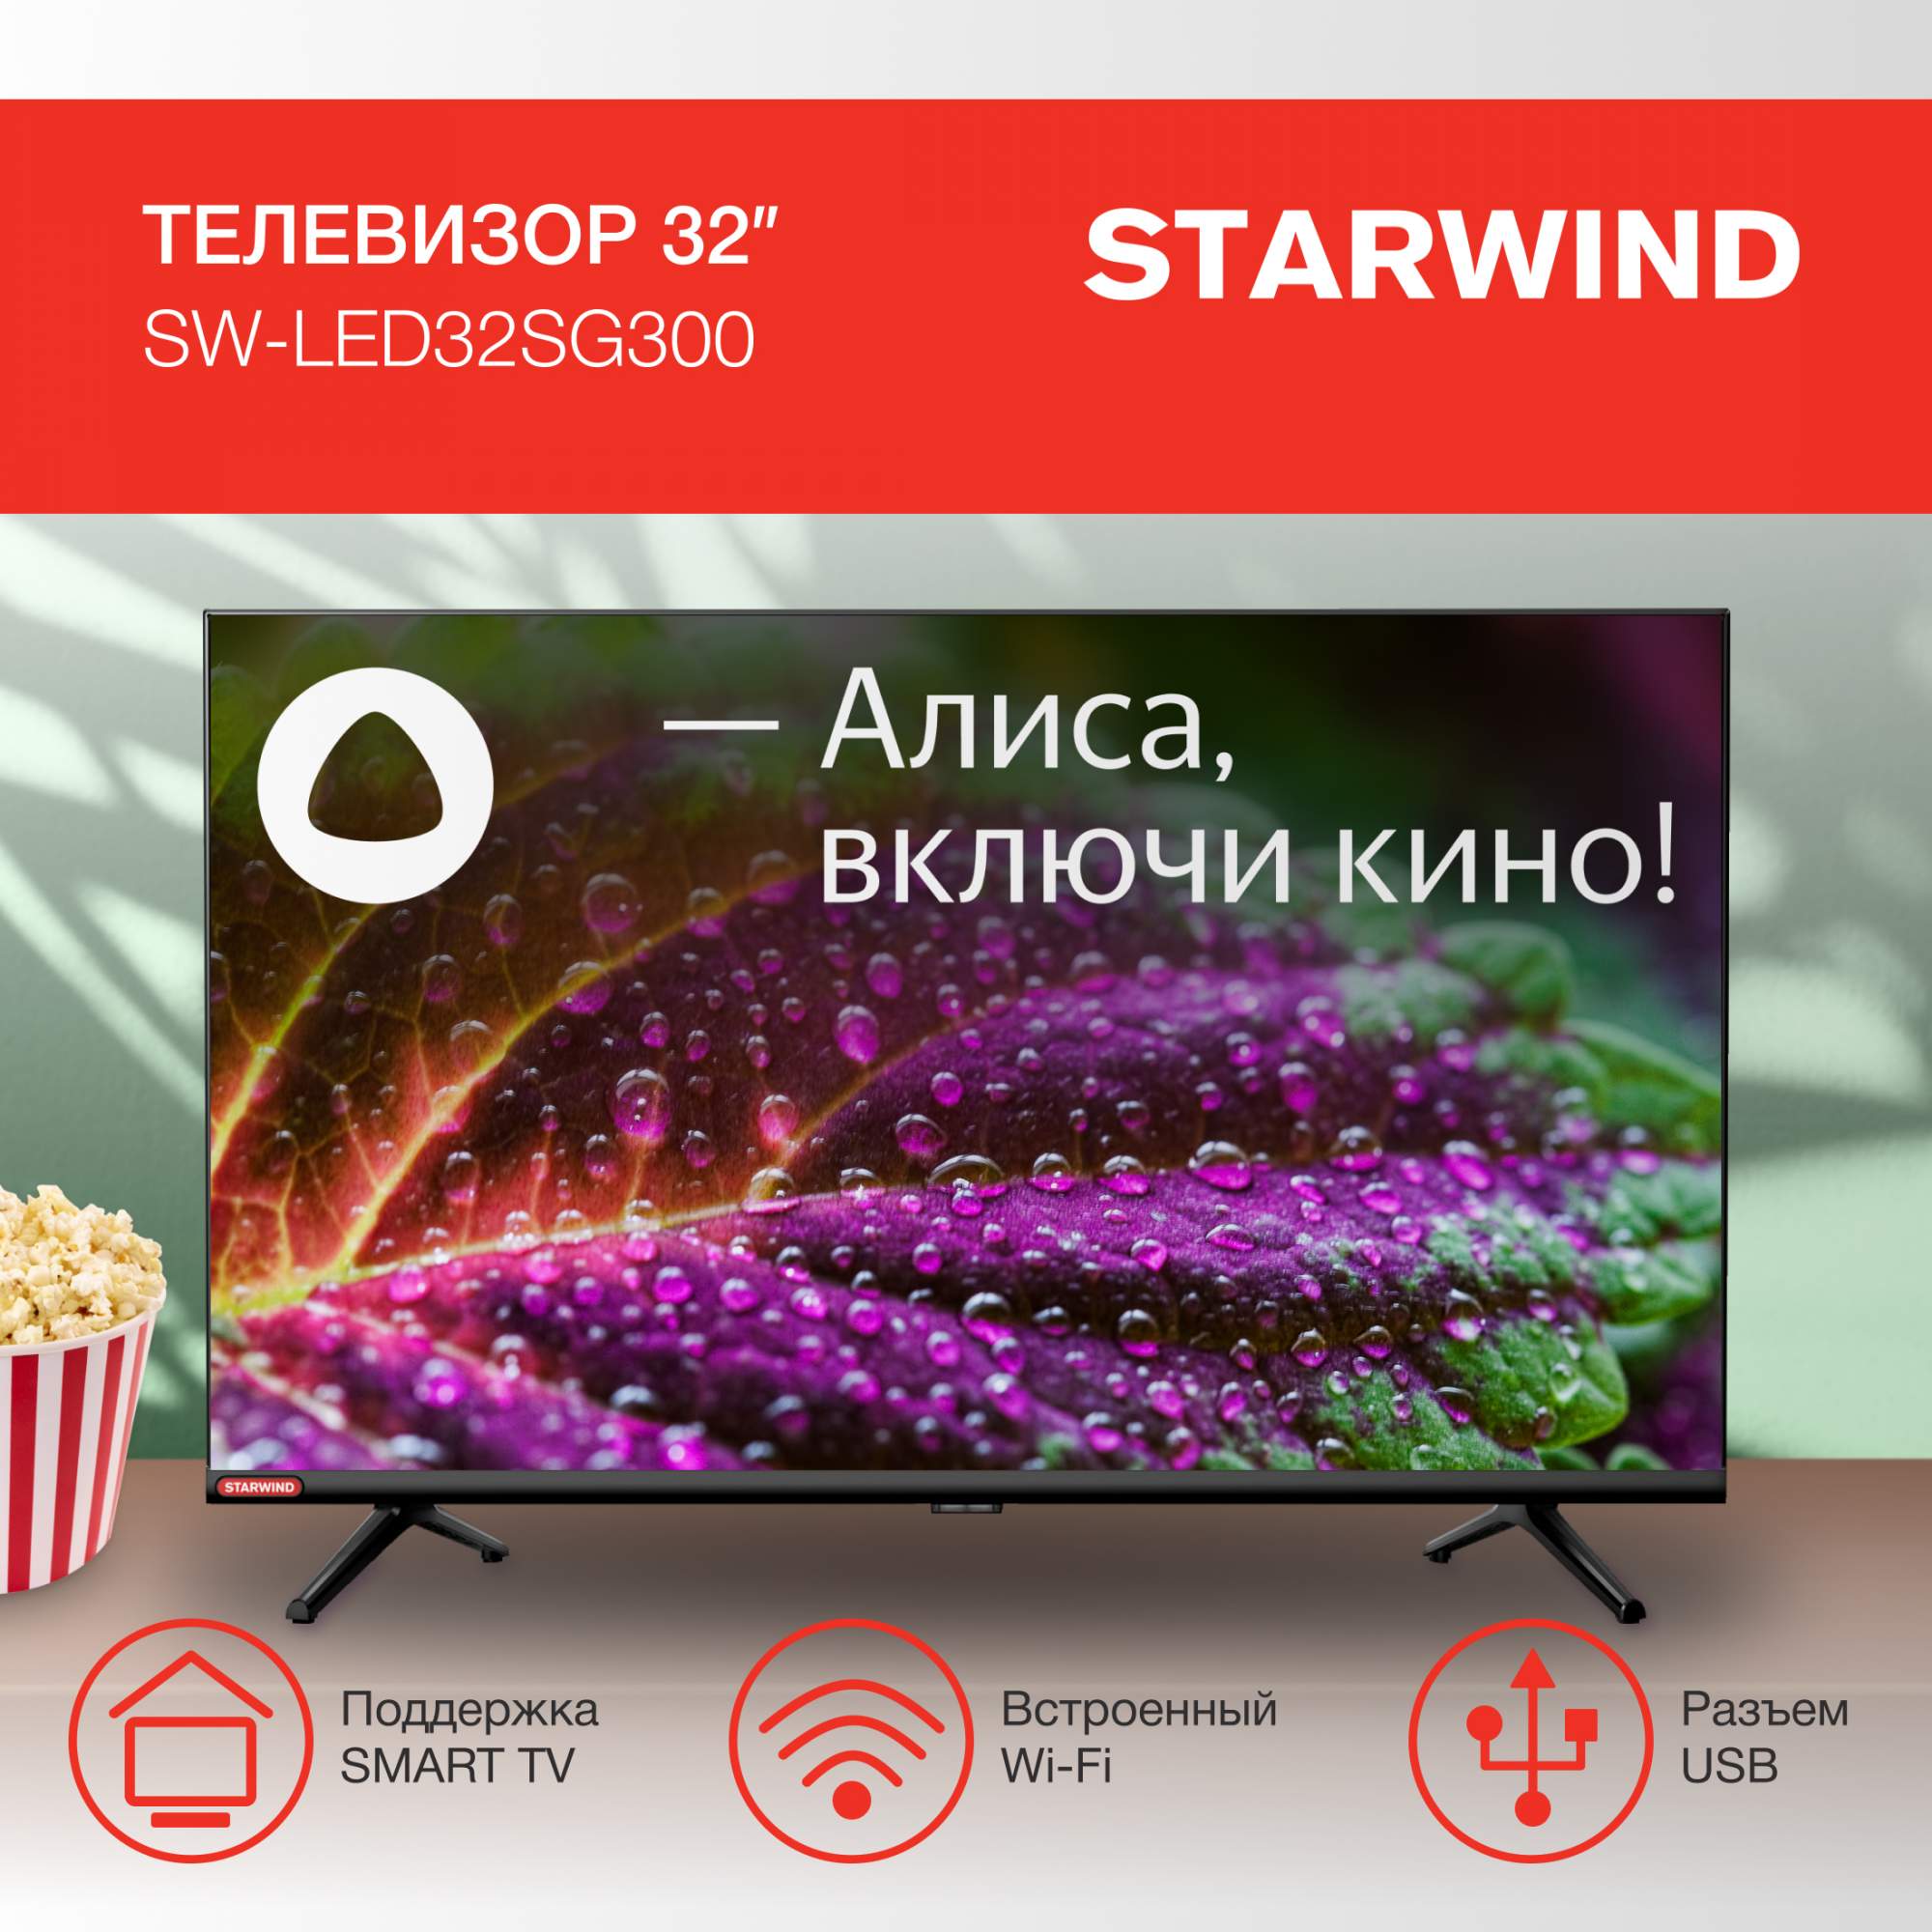 Телевизор STARWIND SW-LED32SG300, 32"(81 см), HD - купить в Бытовая техника со склада, цена на Мегамаркет